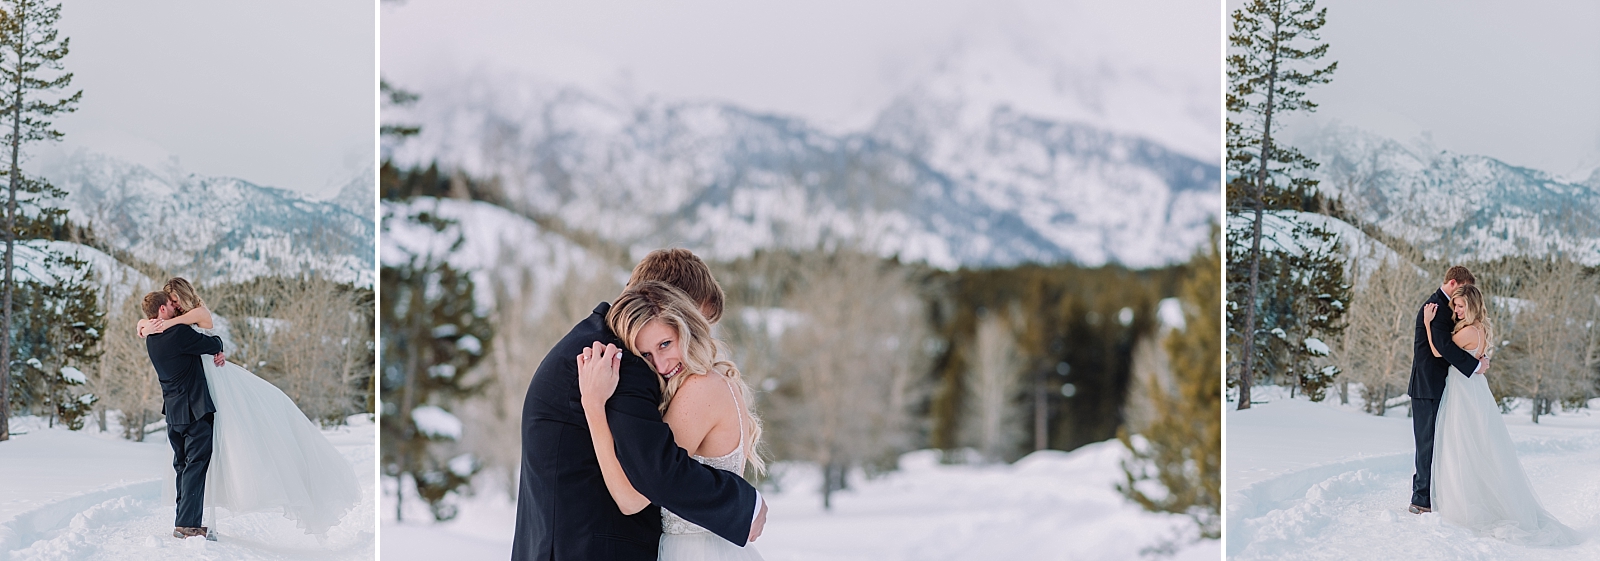 bride-and-groom-hugging-under-the-mountains-teton-national-park-gtnp-jackson-hole-destination-wedding-photographer-wyoming-elopement-